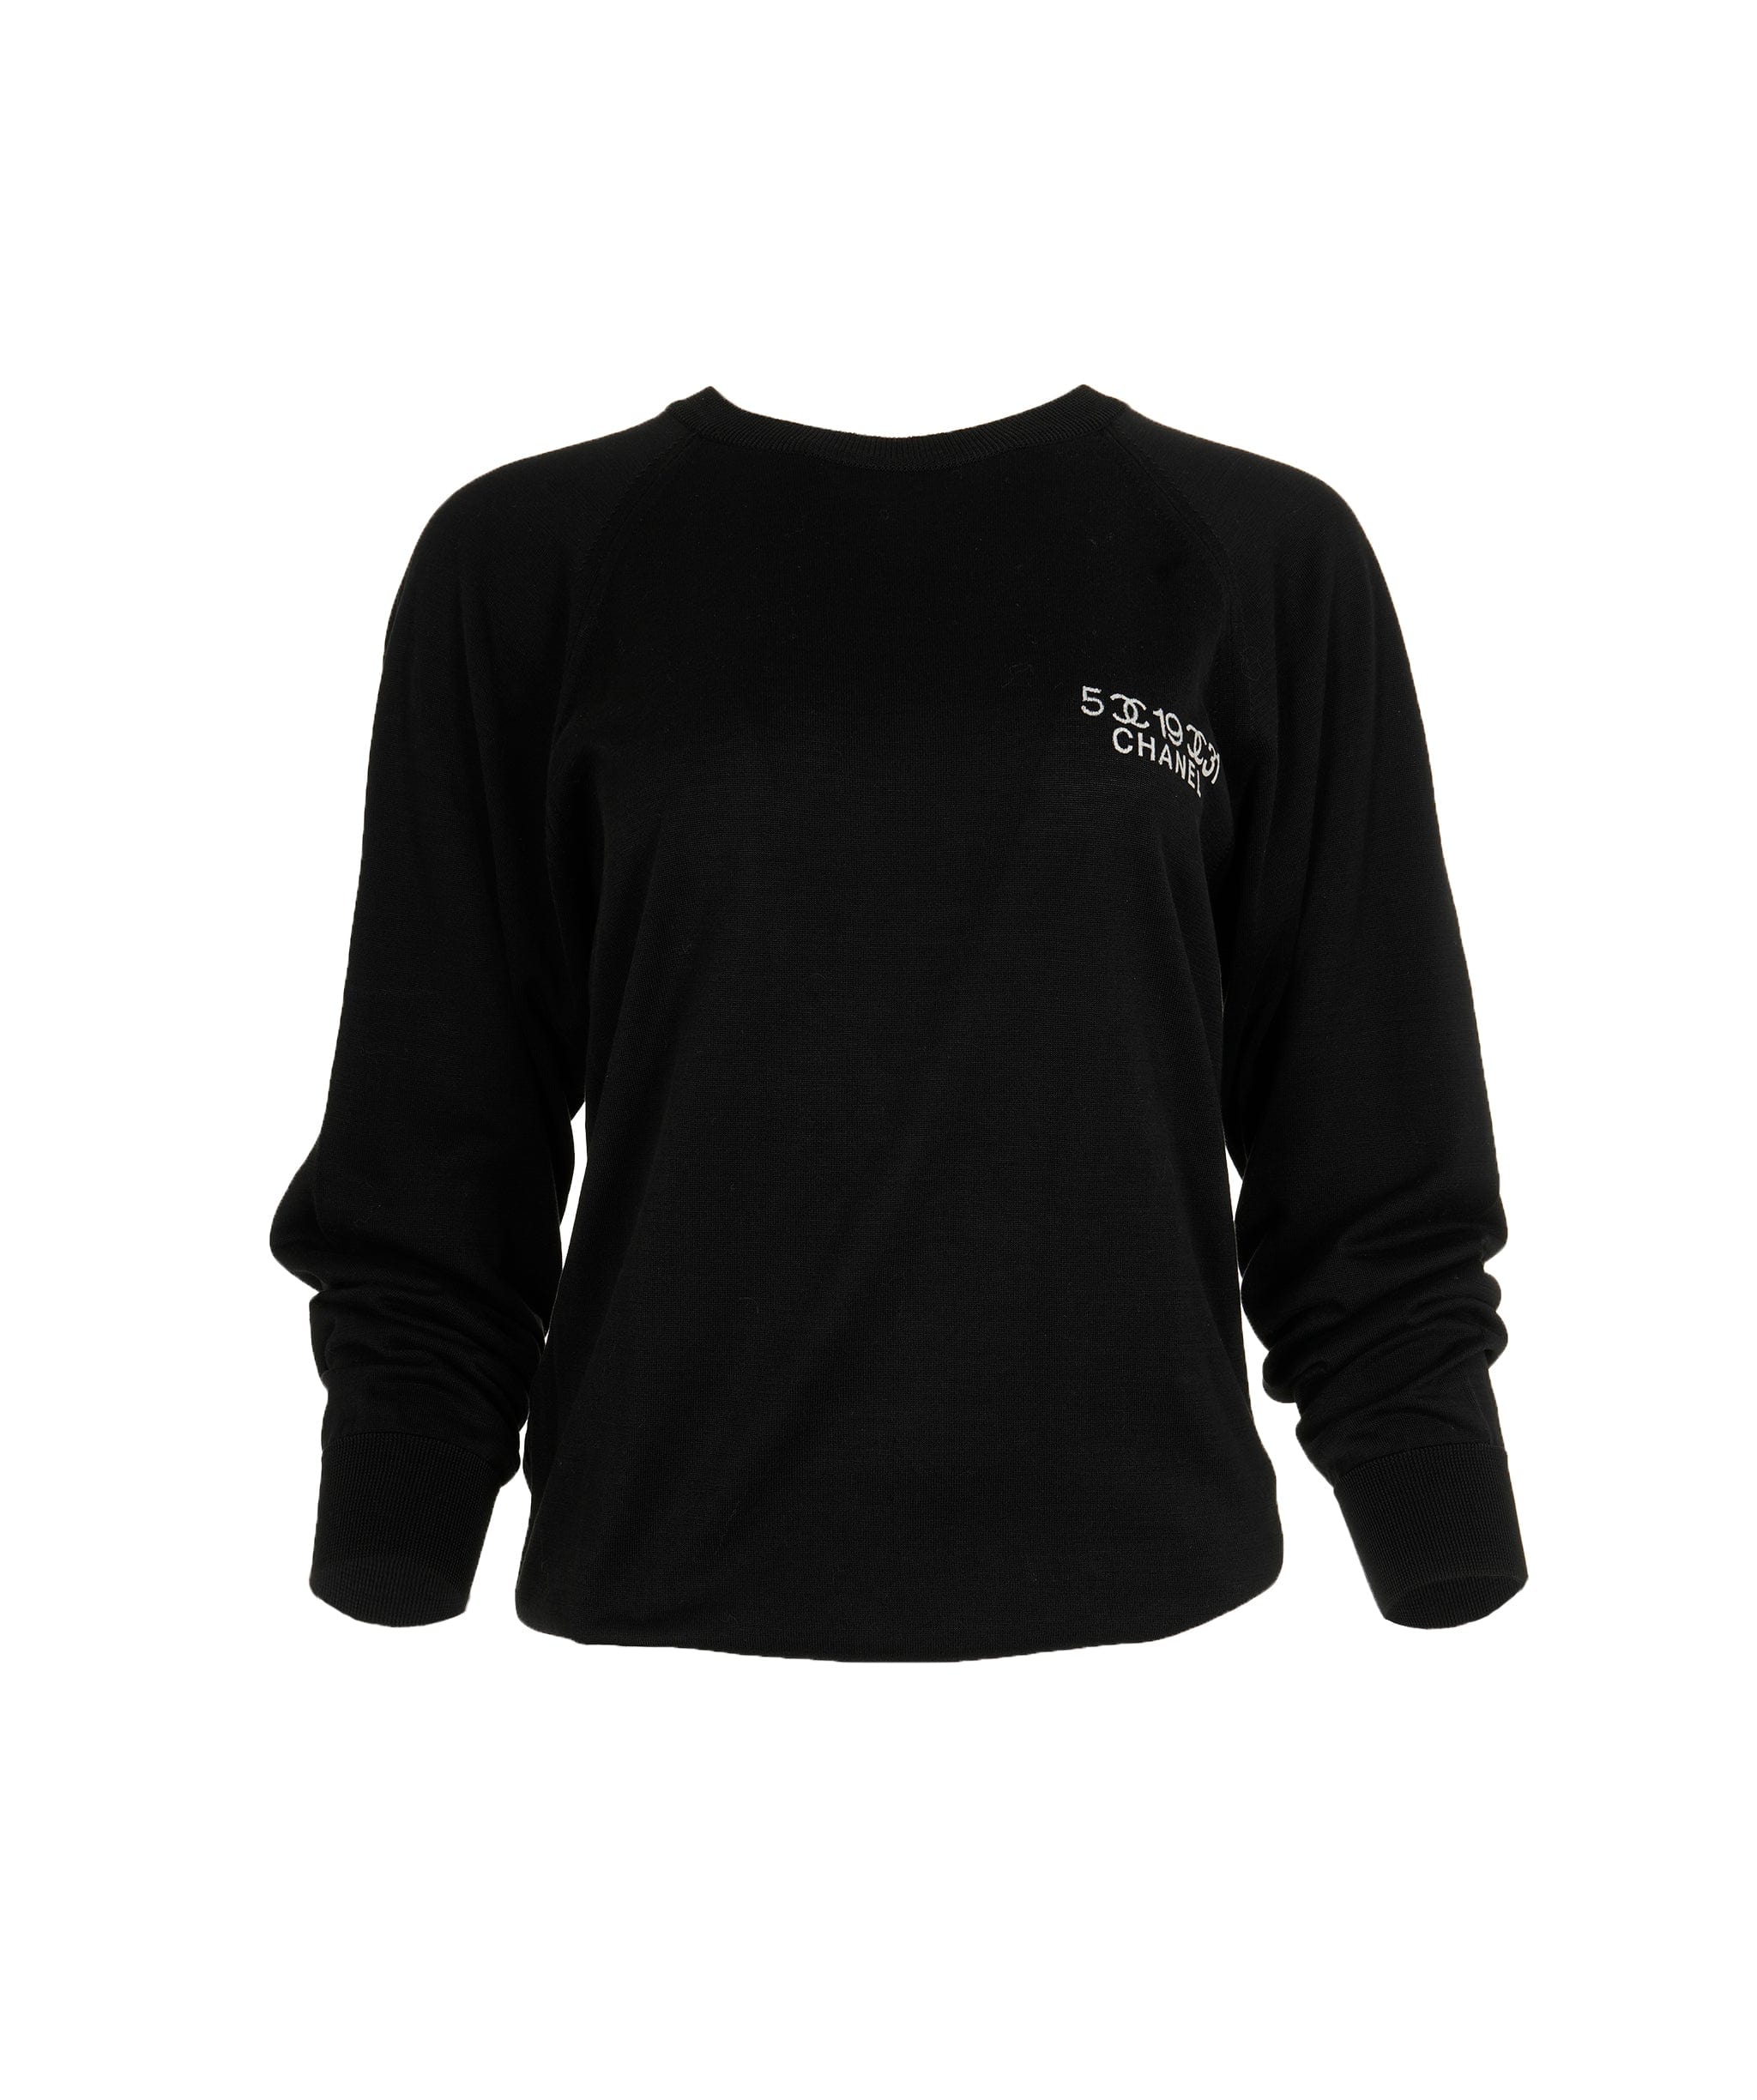 Chanel Chanel Number Logo Sweatshirt Black ASL9709